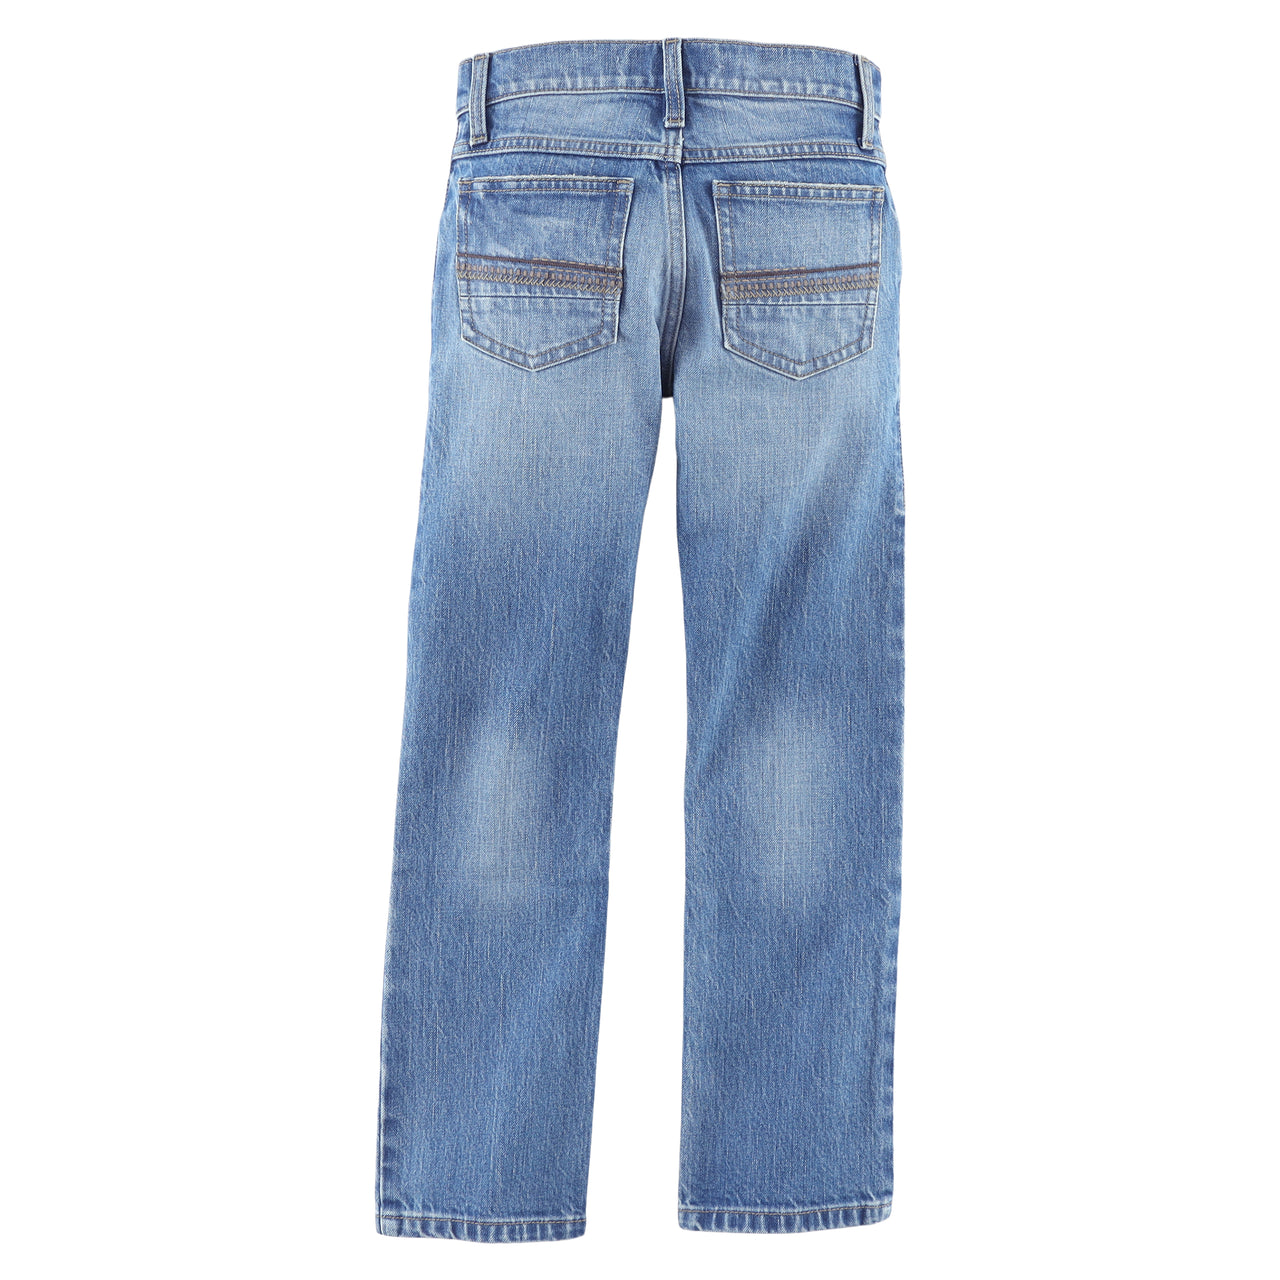 Wrangler Boy's 20X 44 Slim Straight Jeans - Ashbrook